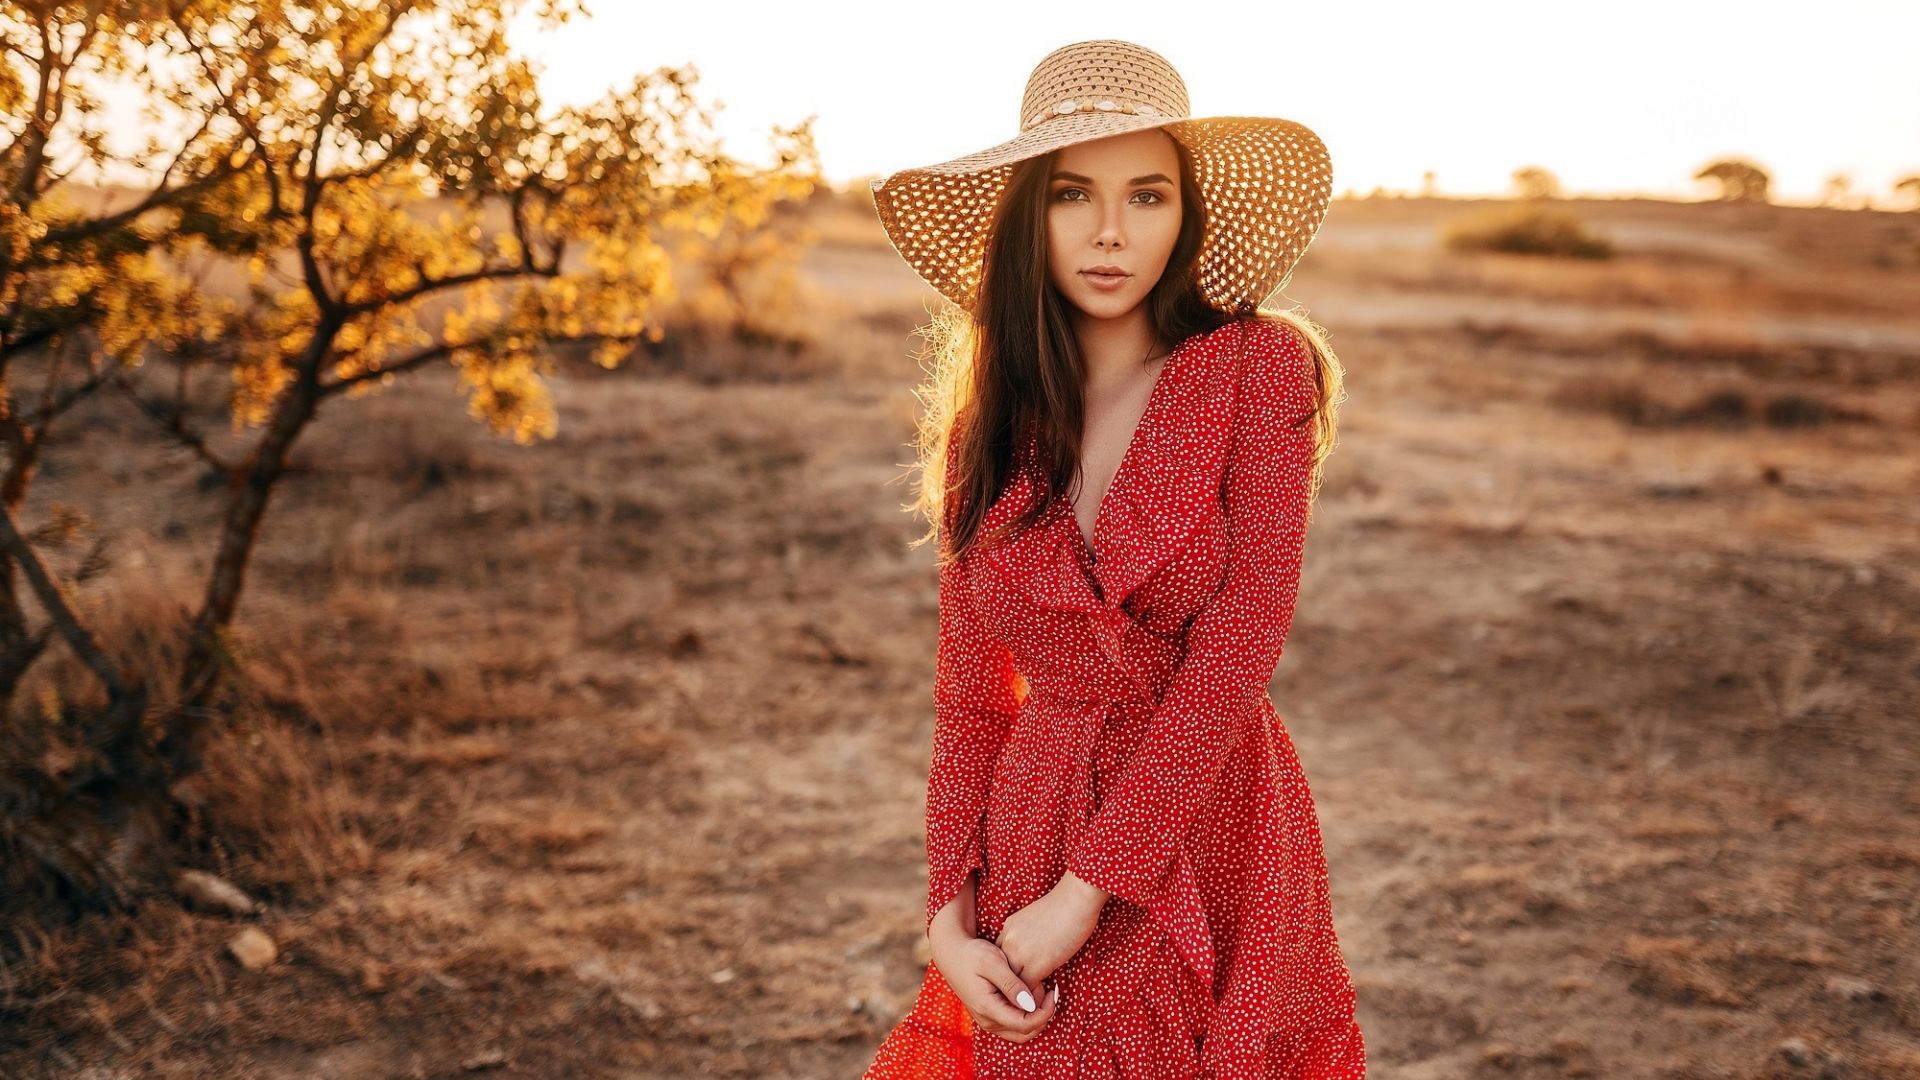 Wallpaper Outdoor, red dress, woman model, 2021